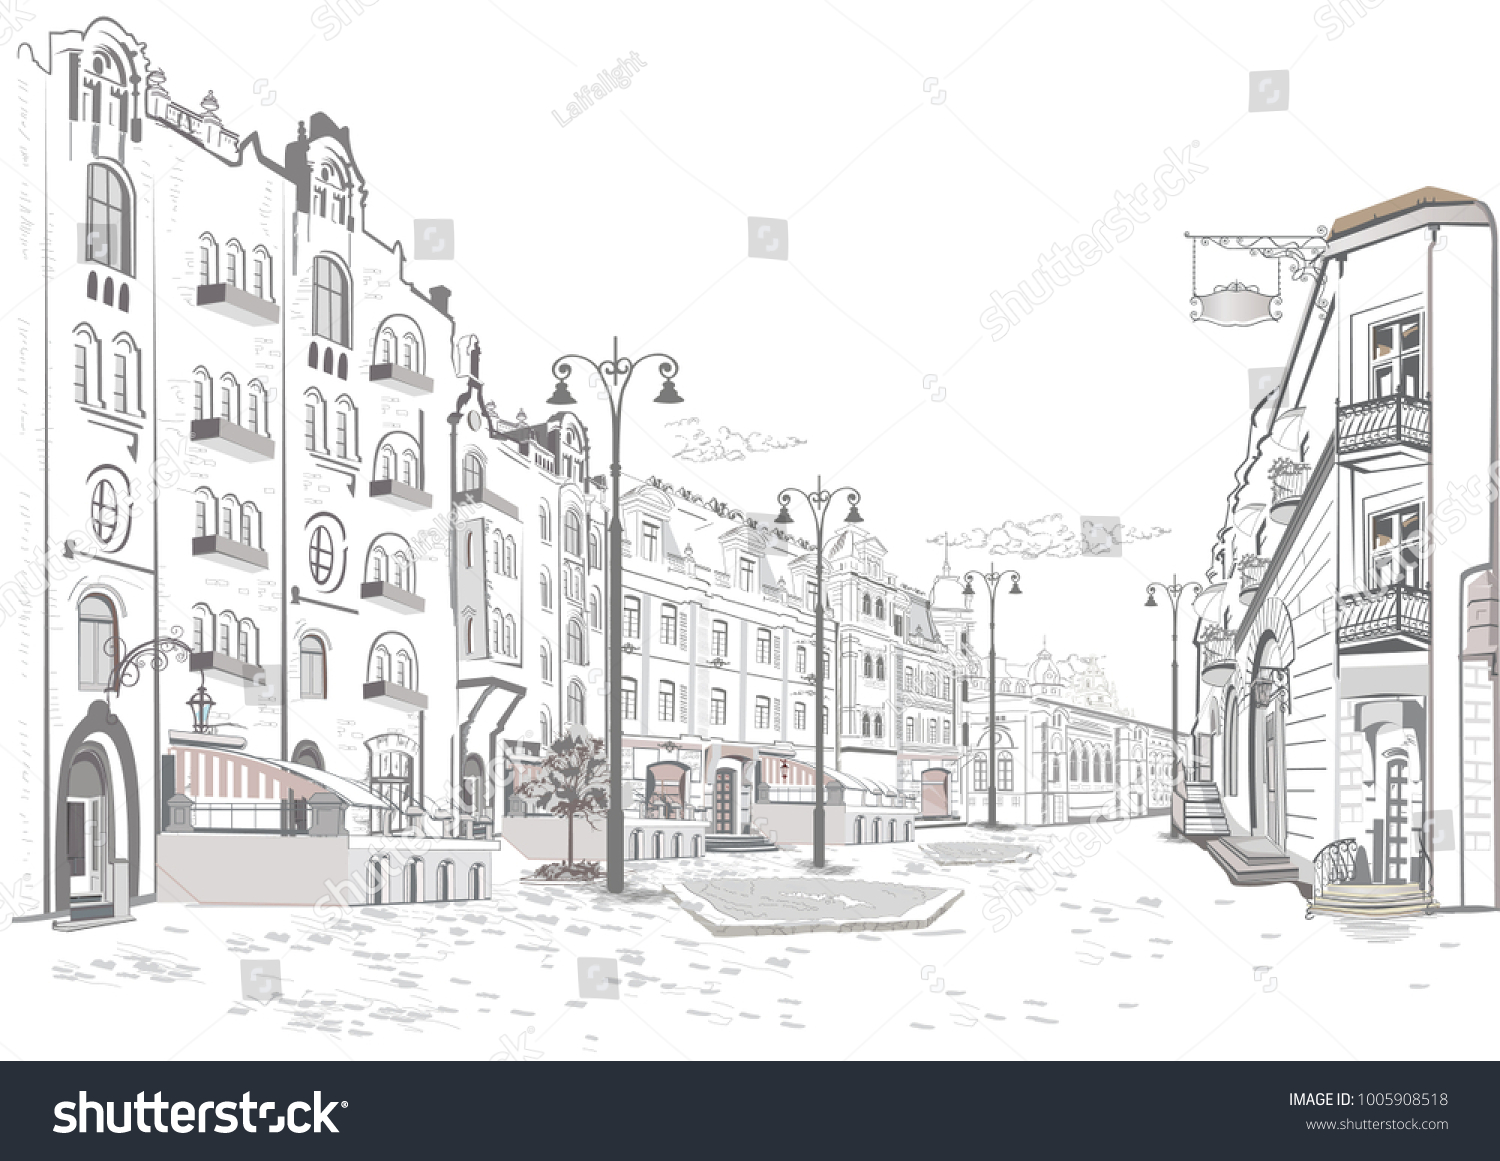 Old Street drawn vector